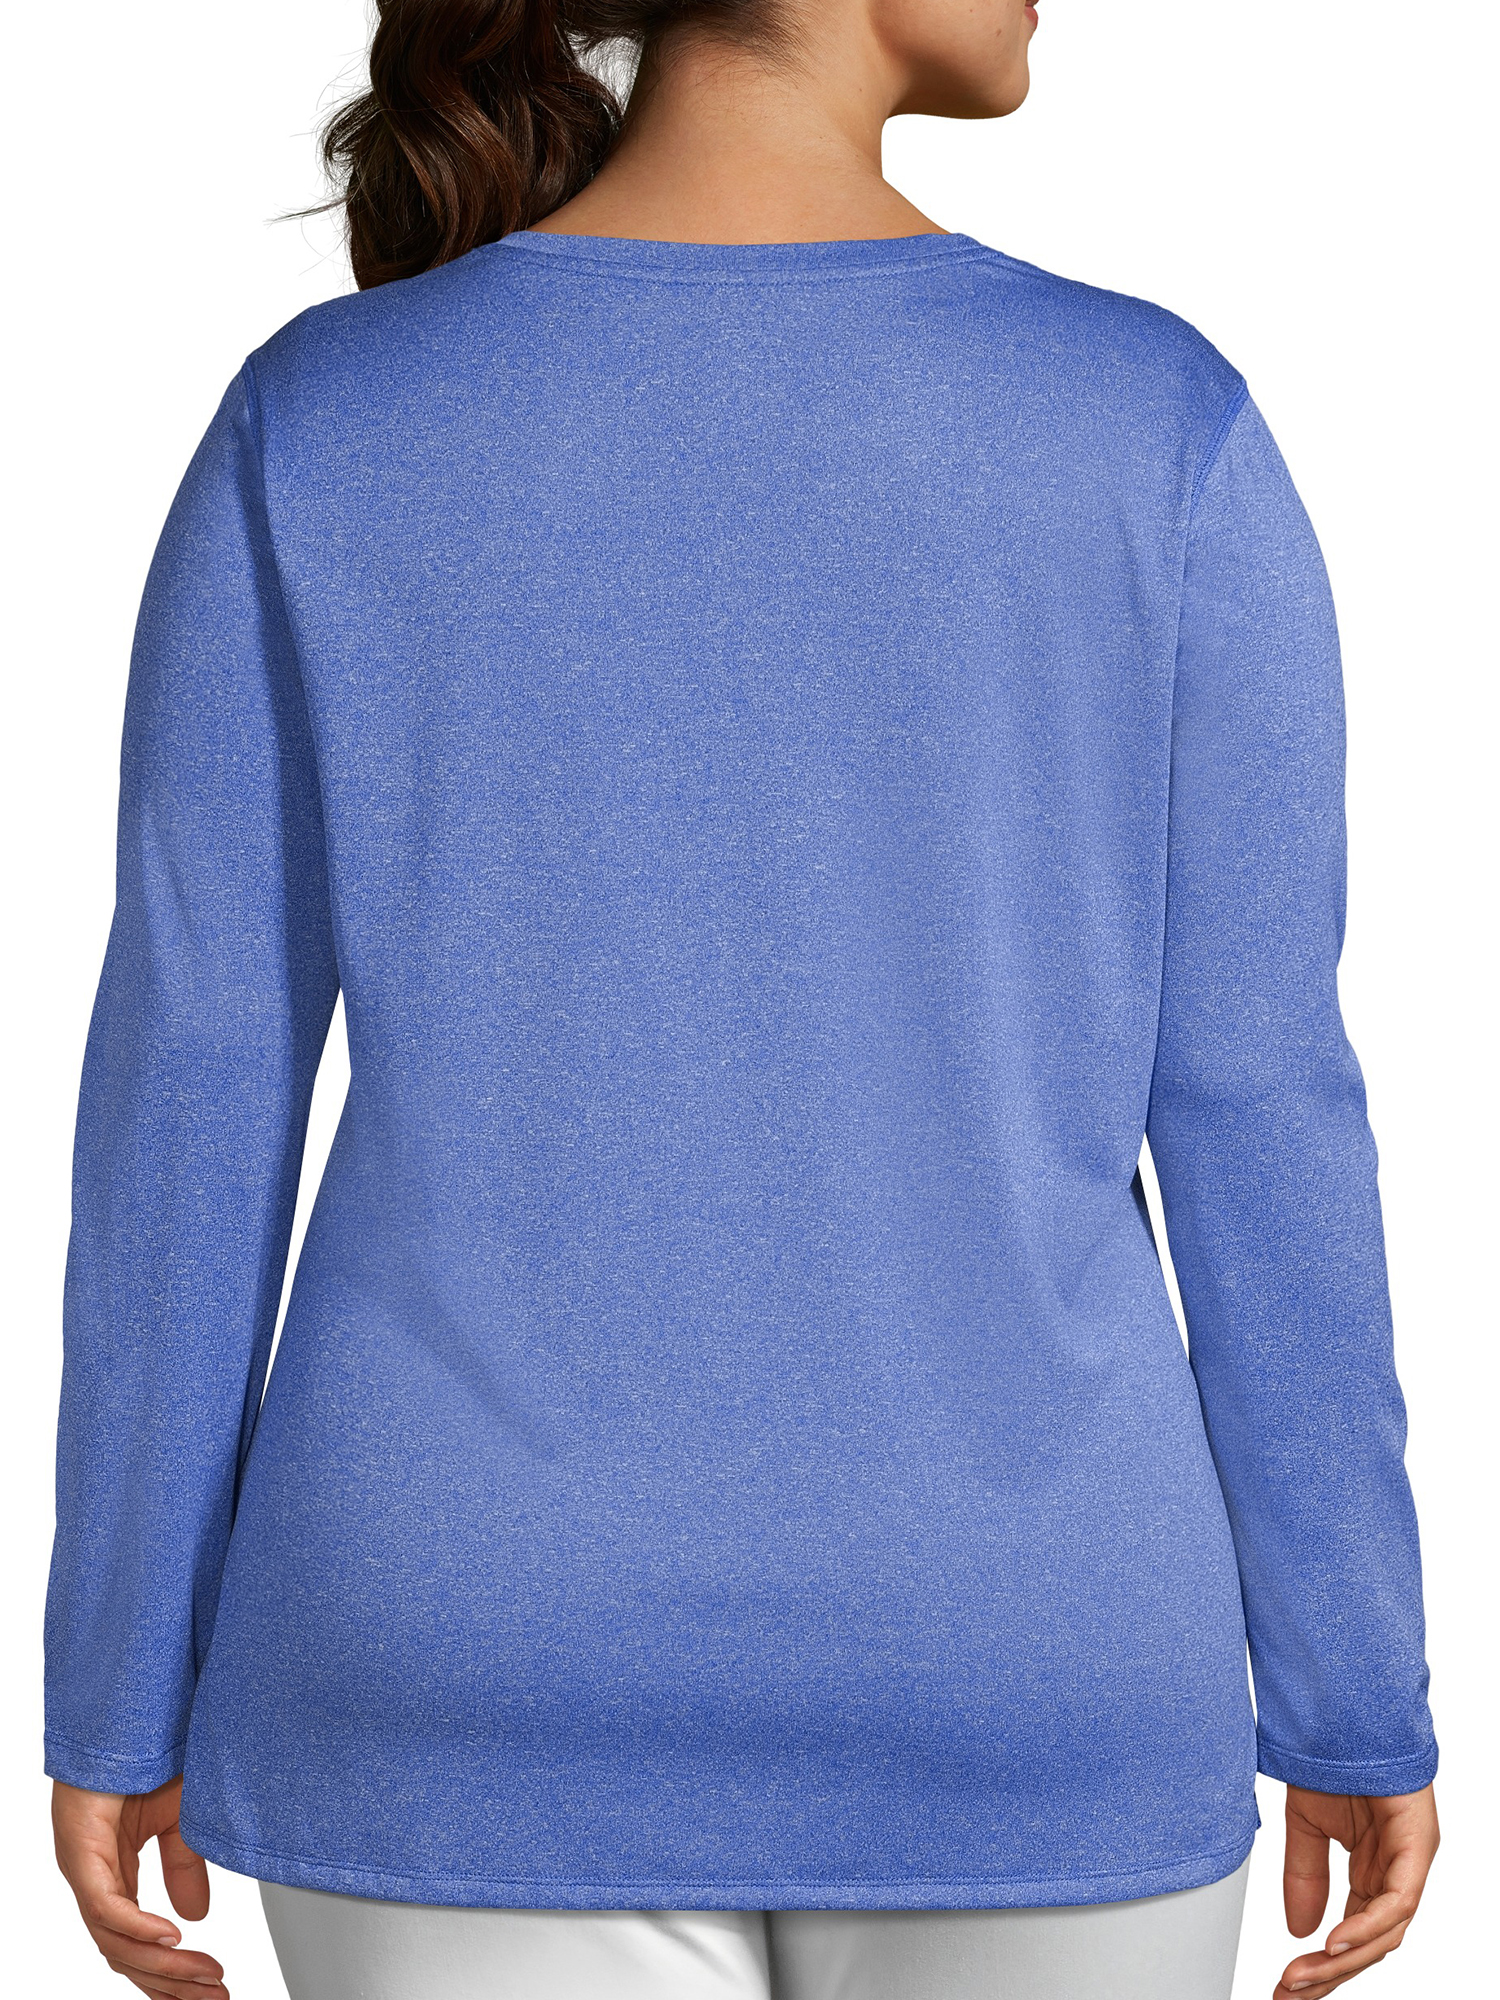 Women's Plus Size Cooldri Long Sleeve Graphic V-neck - image 4 of 5